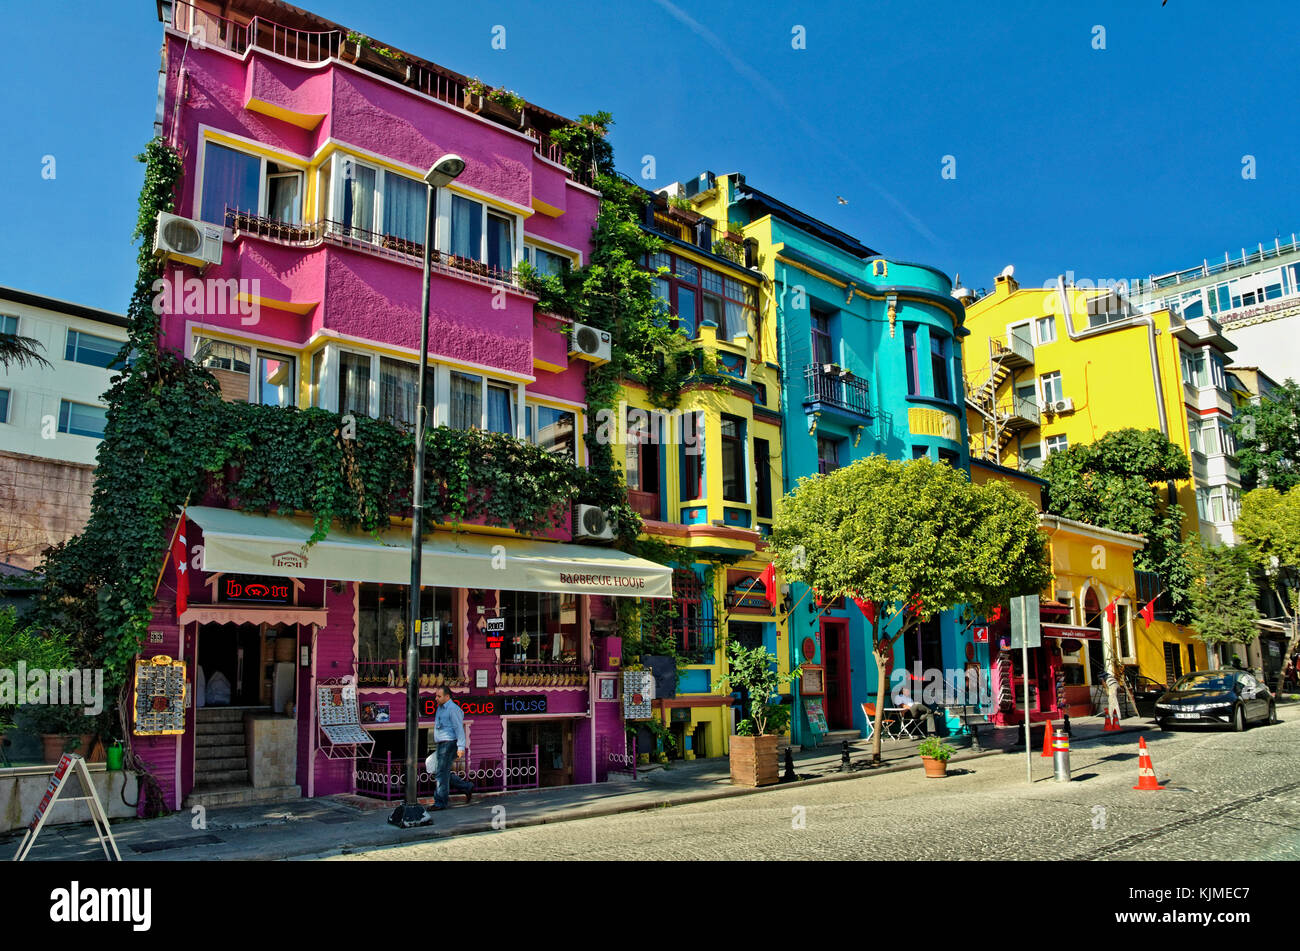 Colourful hotels on Yerebatan Street, adjacent to the Yerebatan underground cistern, Sultanahmet, Fatih, Istanbul, Turkey. Stock Photo